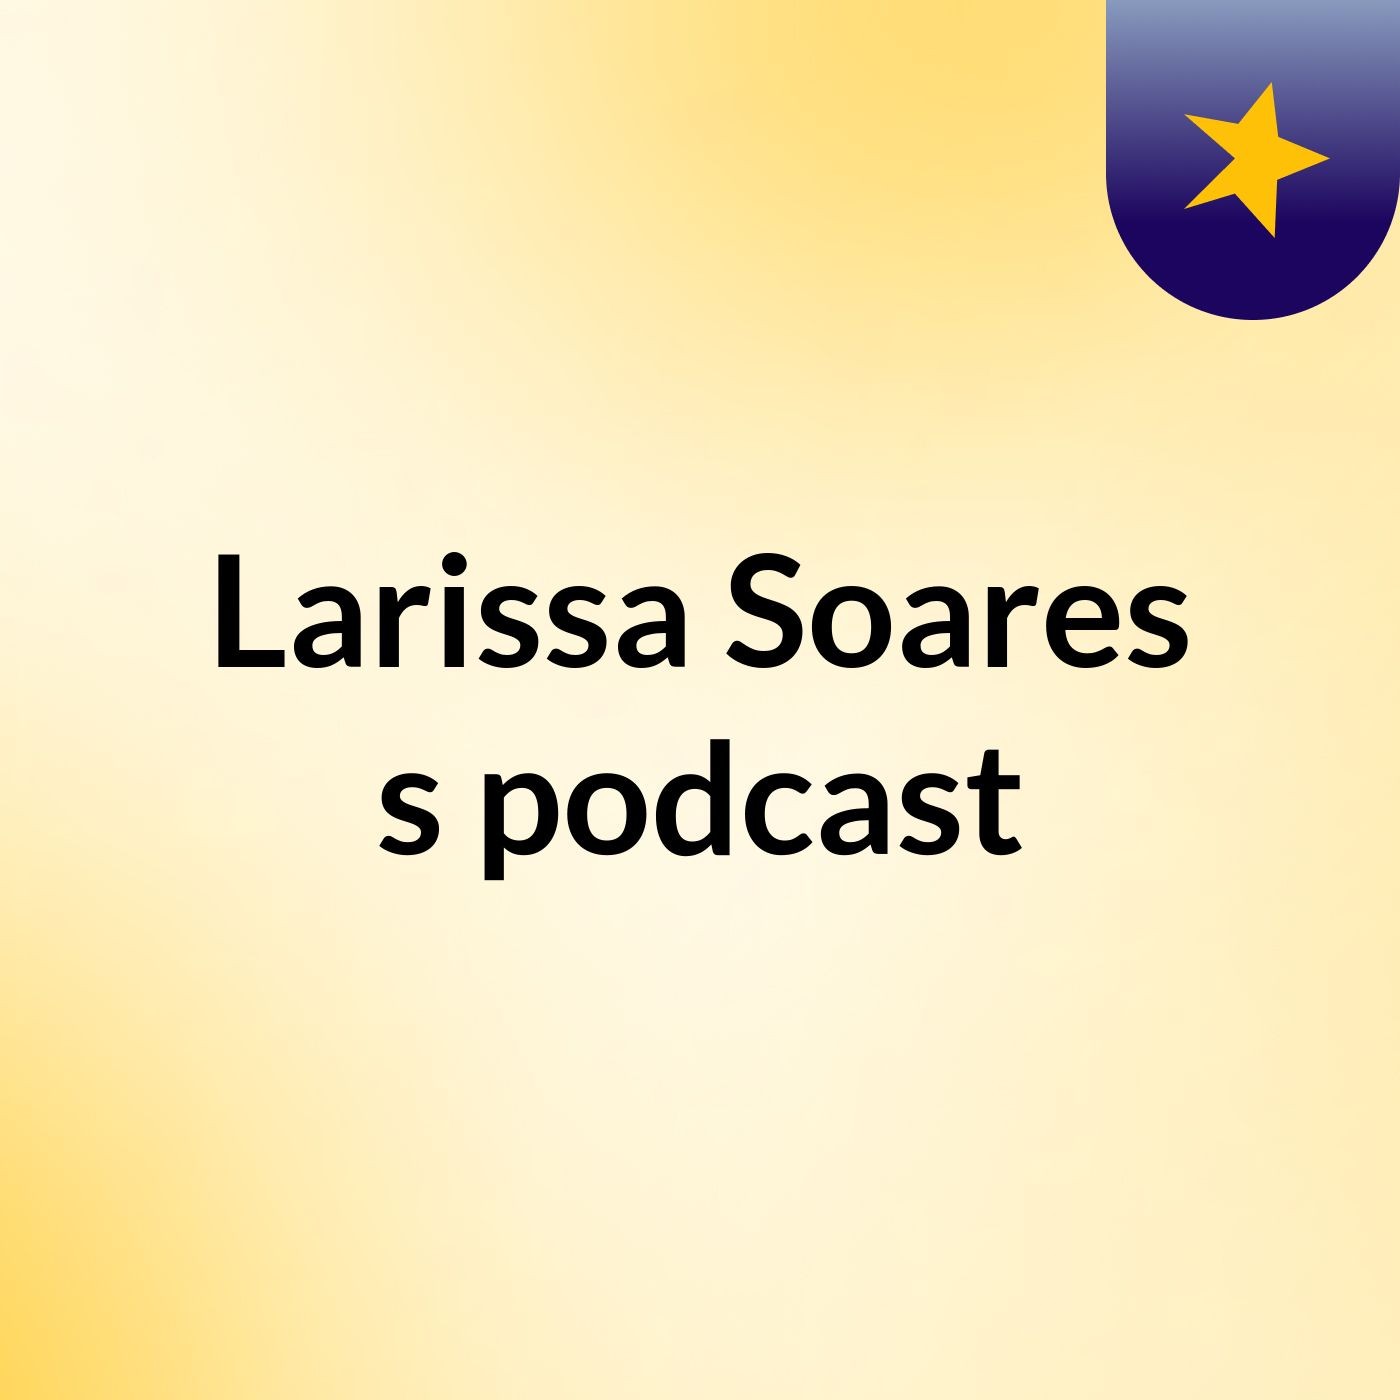 Larissa Soares's podcast